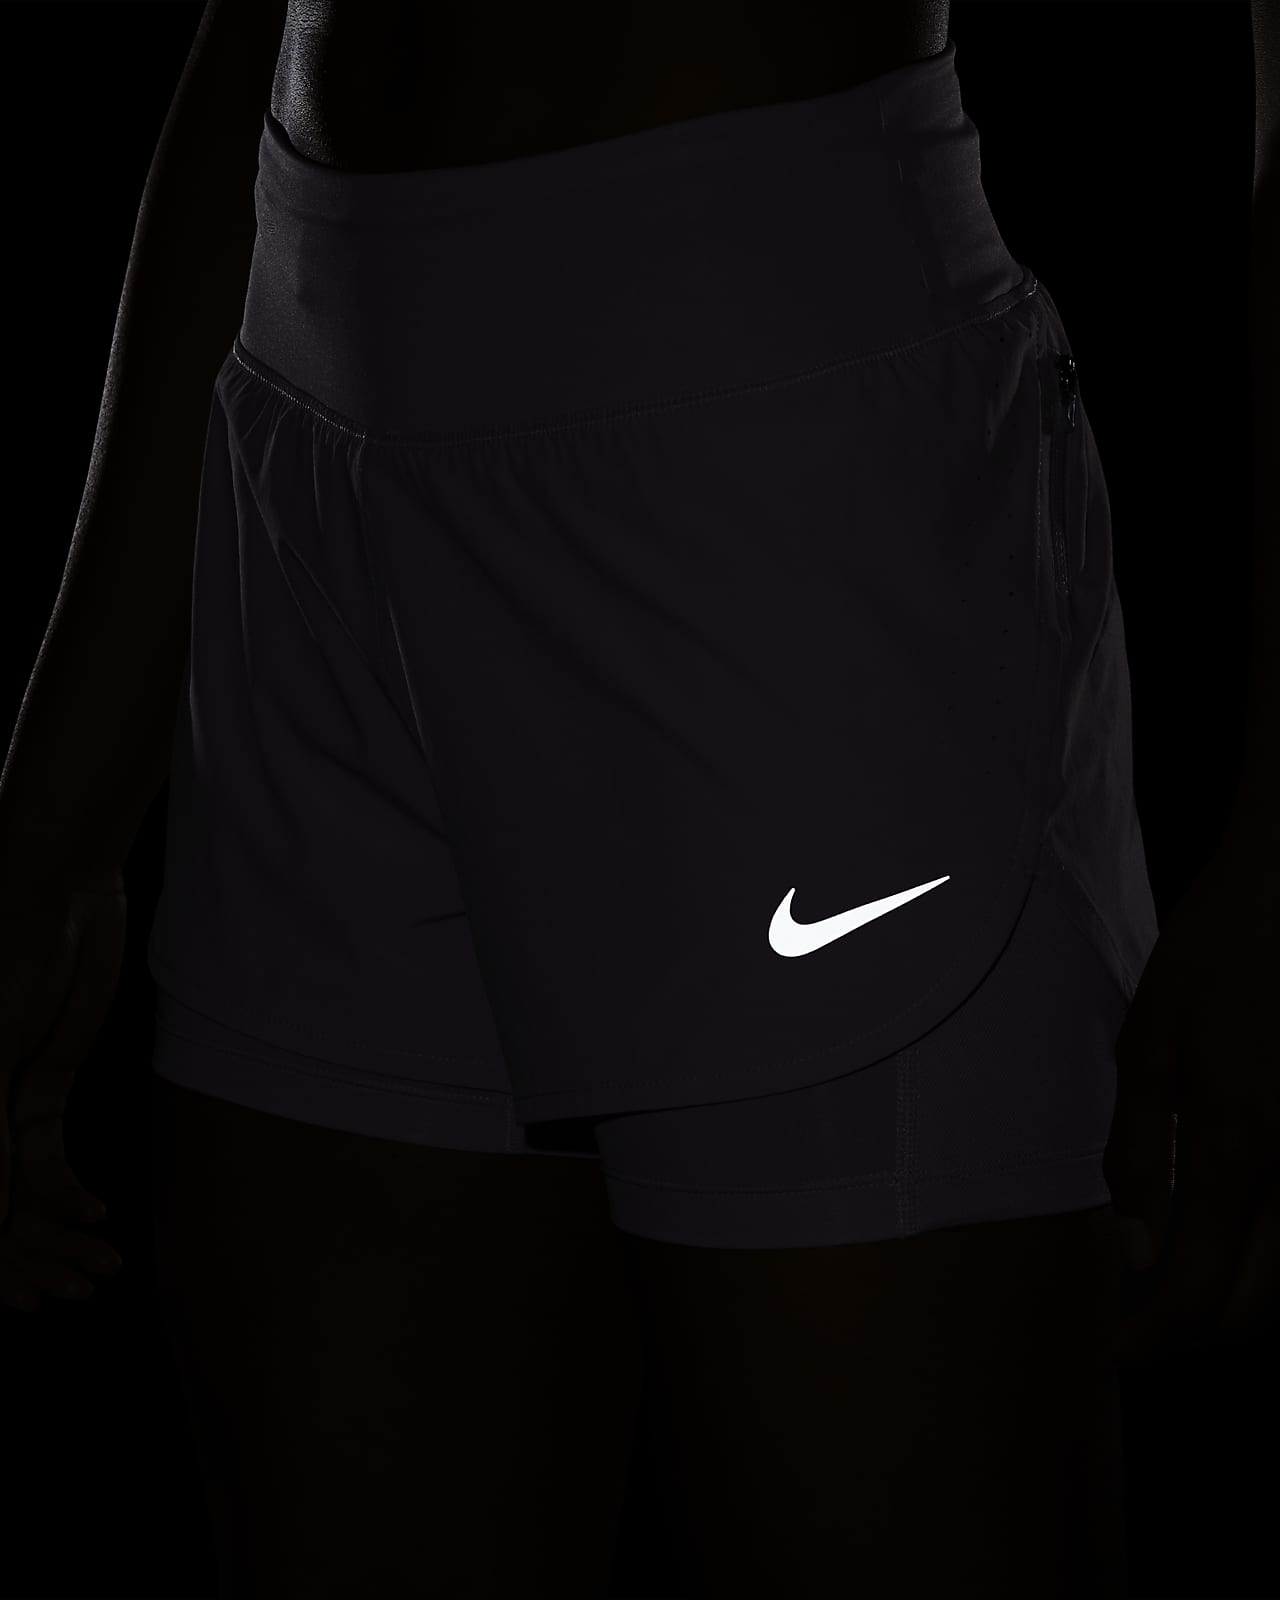 versus willekeurig trog Nike Eclipse Women's 2-In-1 Running Shorts. Nike LU